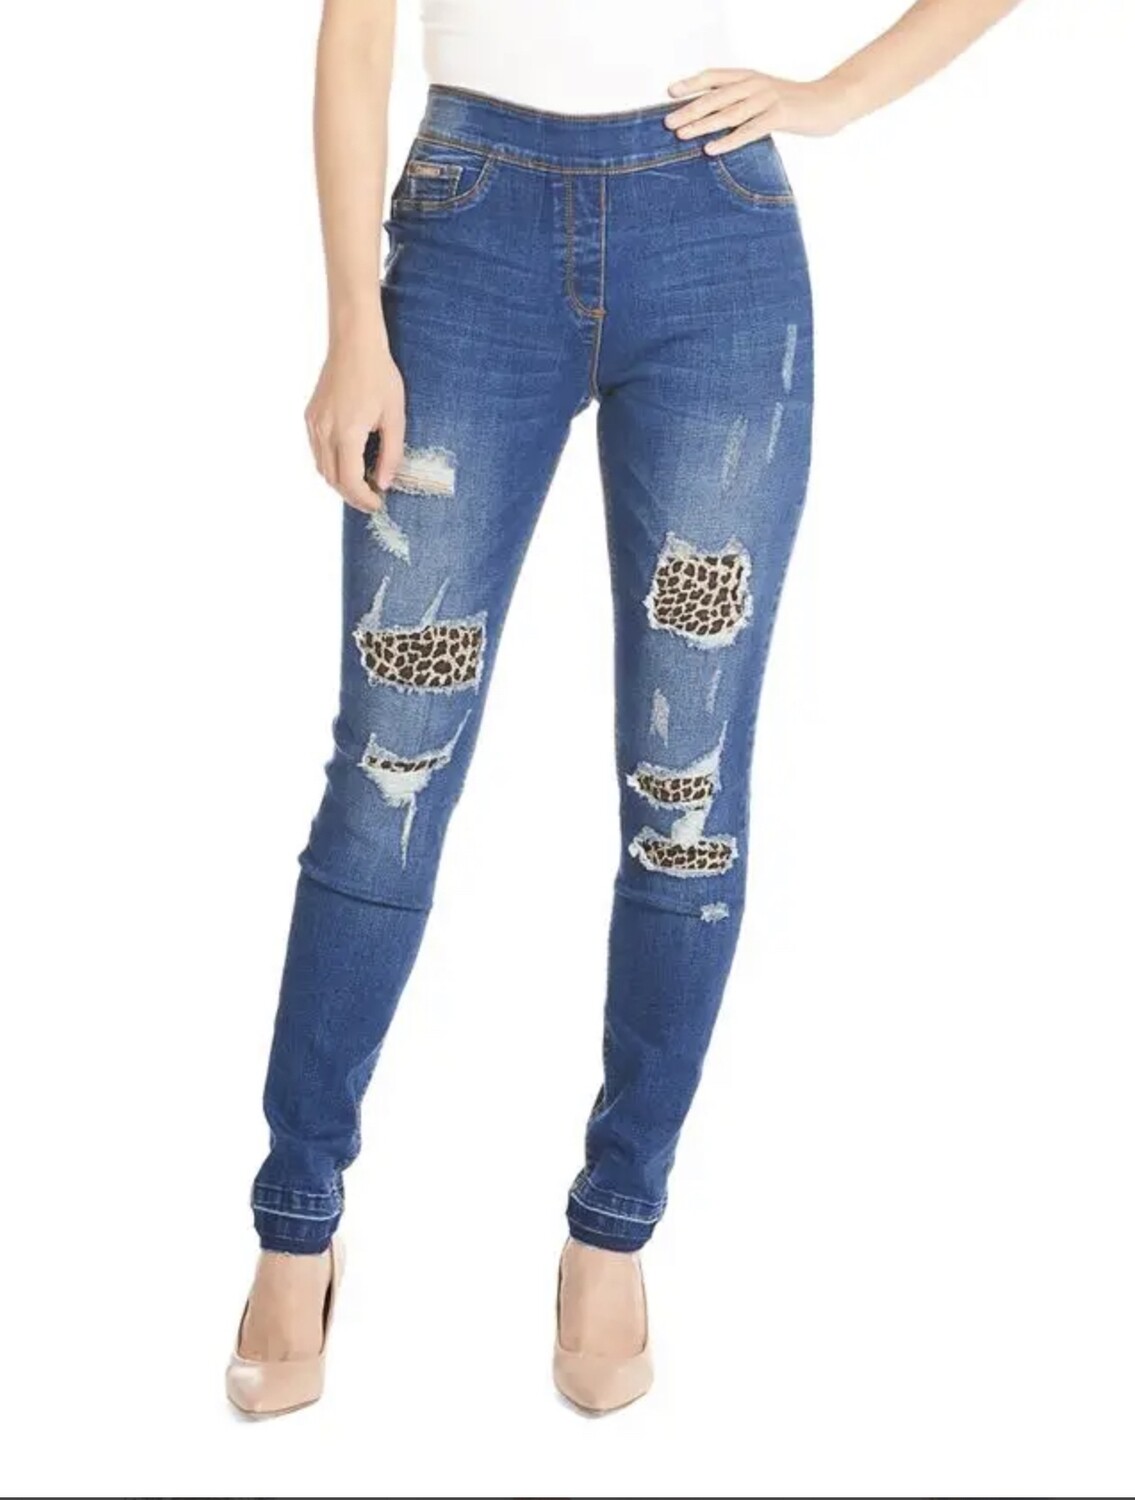 Coco+Carmen OMG Leopard Patchwork Jeans